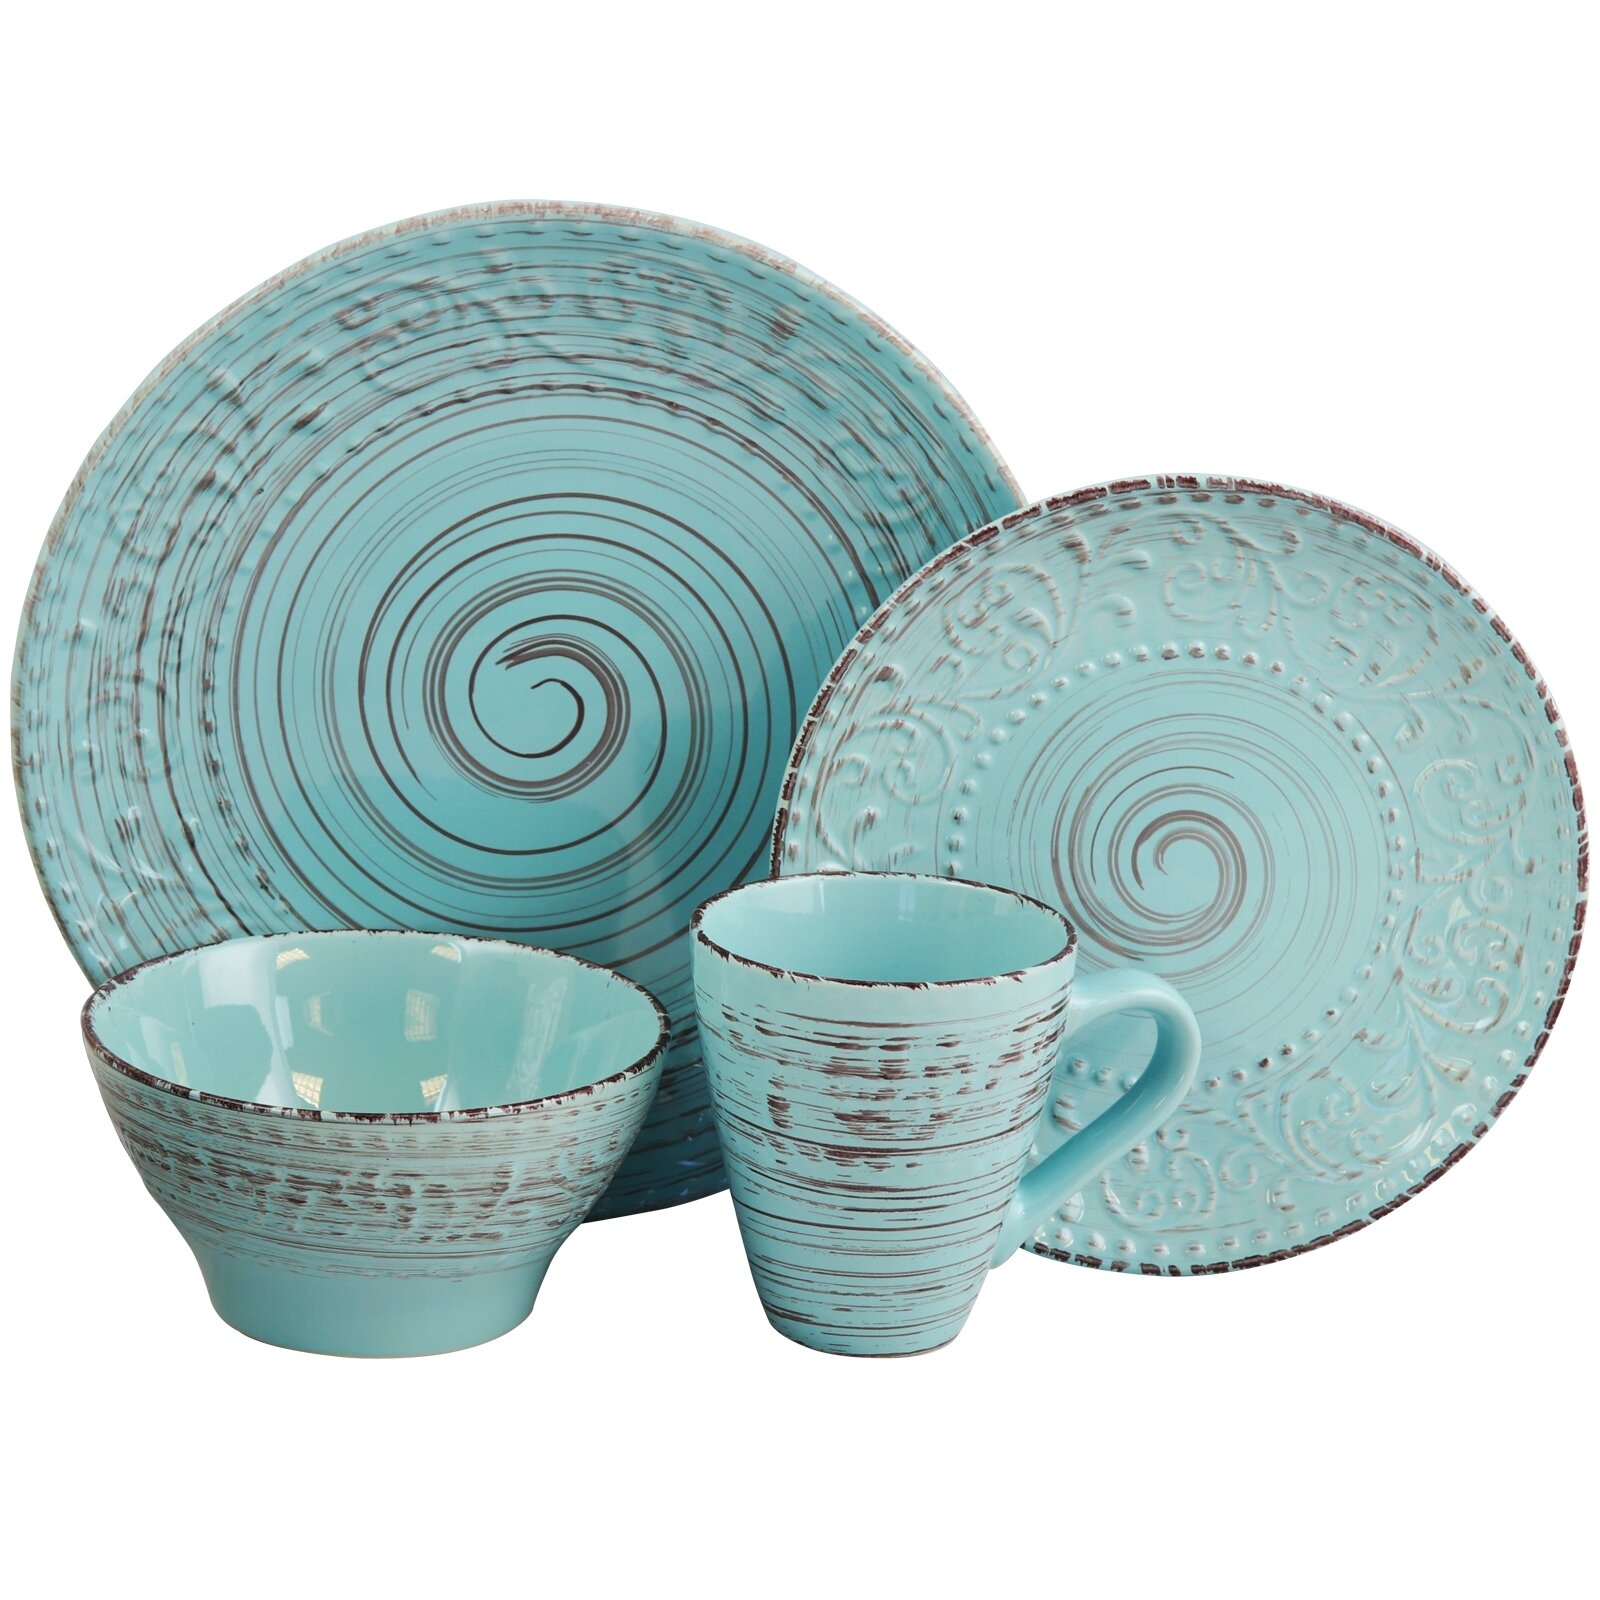 vancasso, Series Bella, 16-Piece Stoneware Dinnerware Set, Multicolor  Turquoise Dinner Set, Service for 4